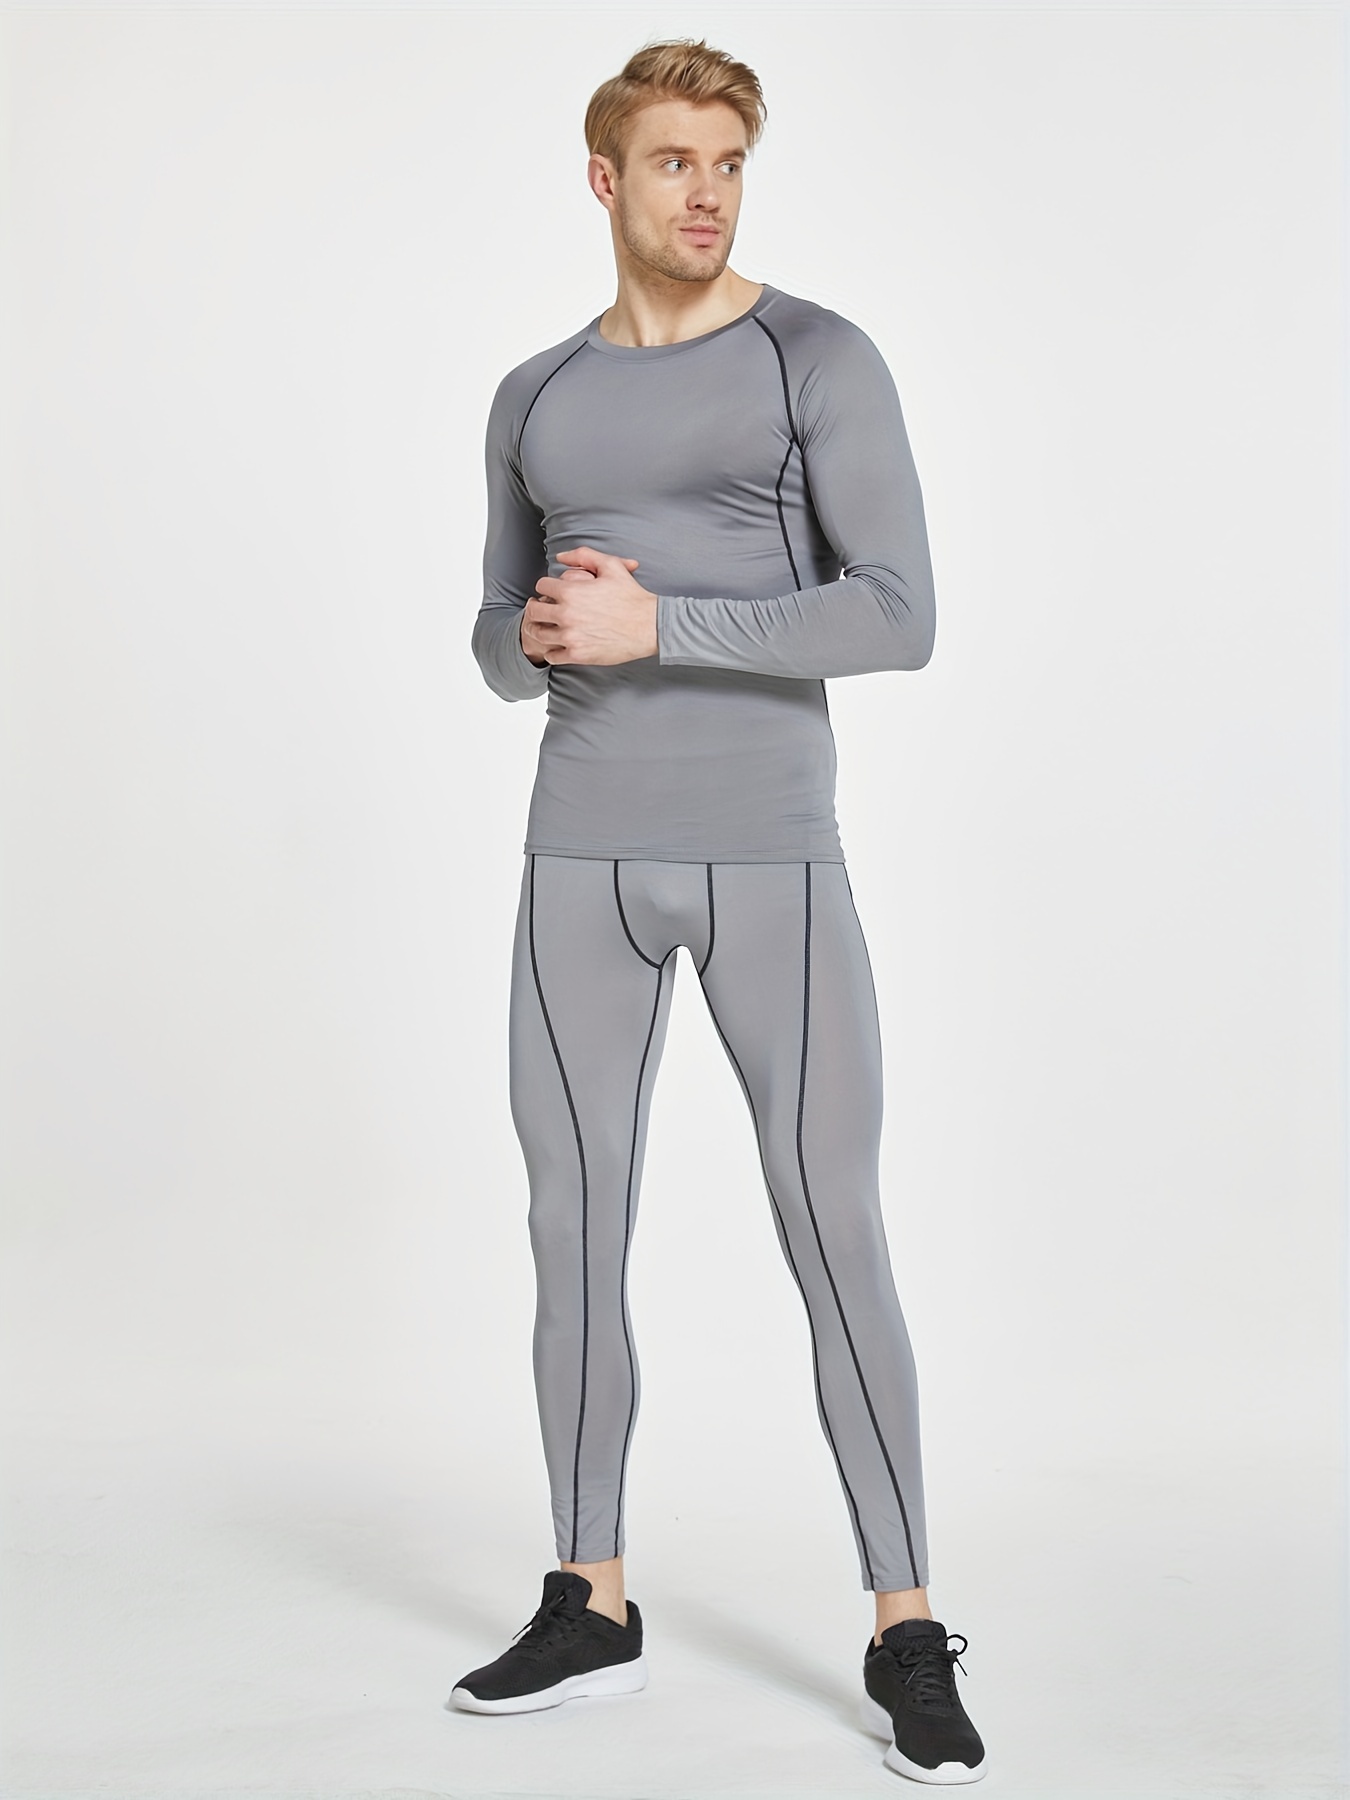 Camiseta de compresión de secado rápido para hombre, ropa manga corta  ajustada para correr, gimnasio, fitness